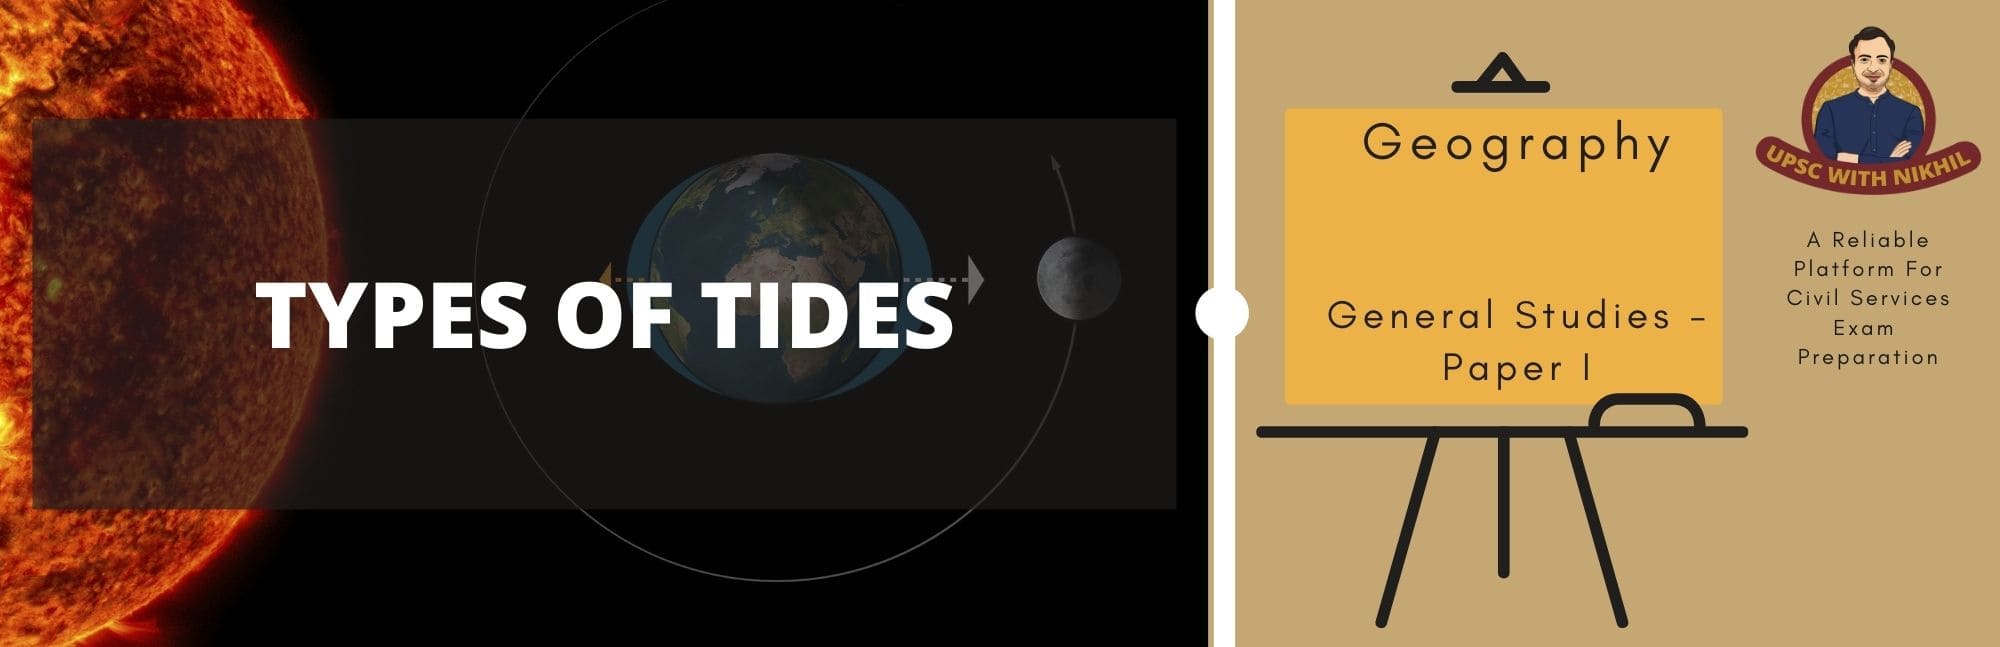 Types of Tides